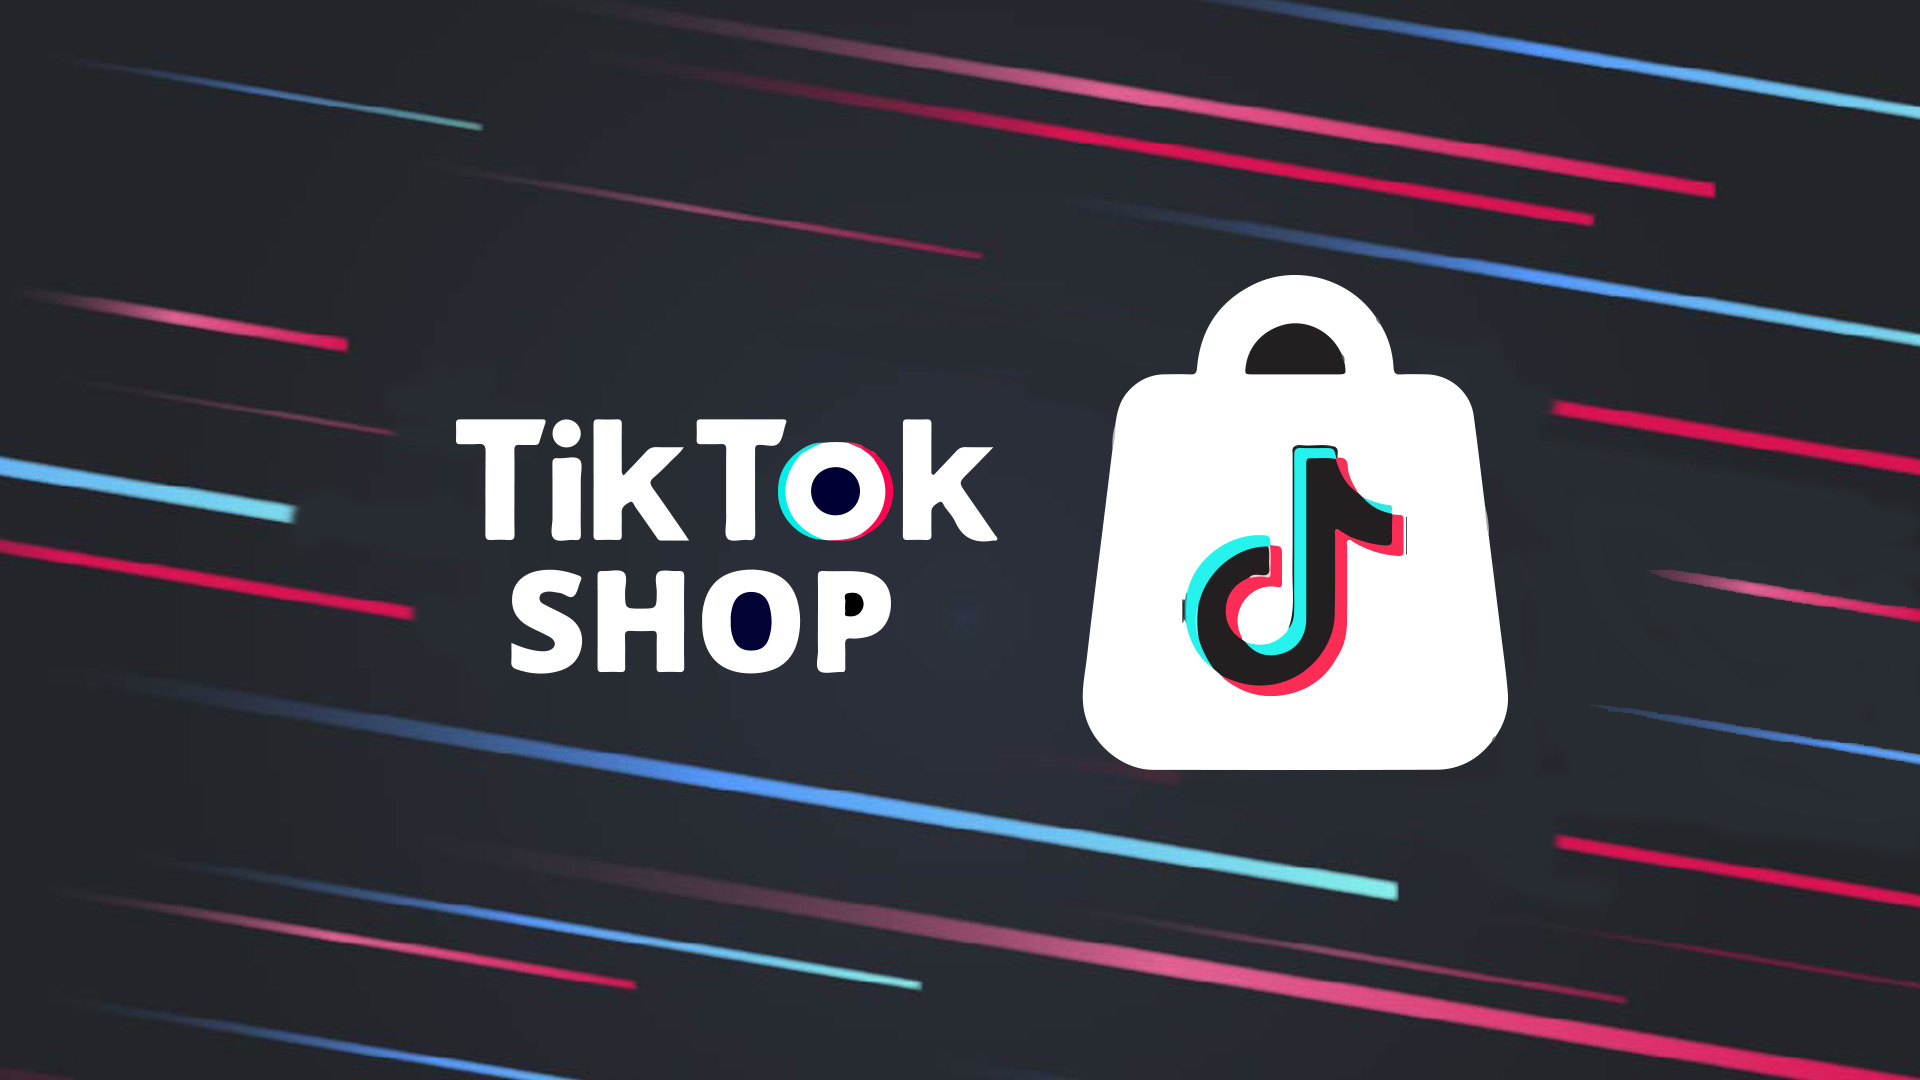 TikTok Shop在泰发展强劲